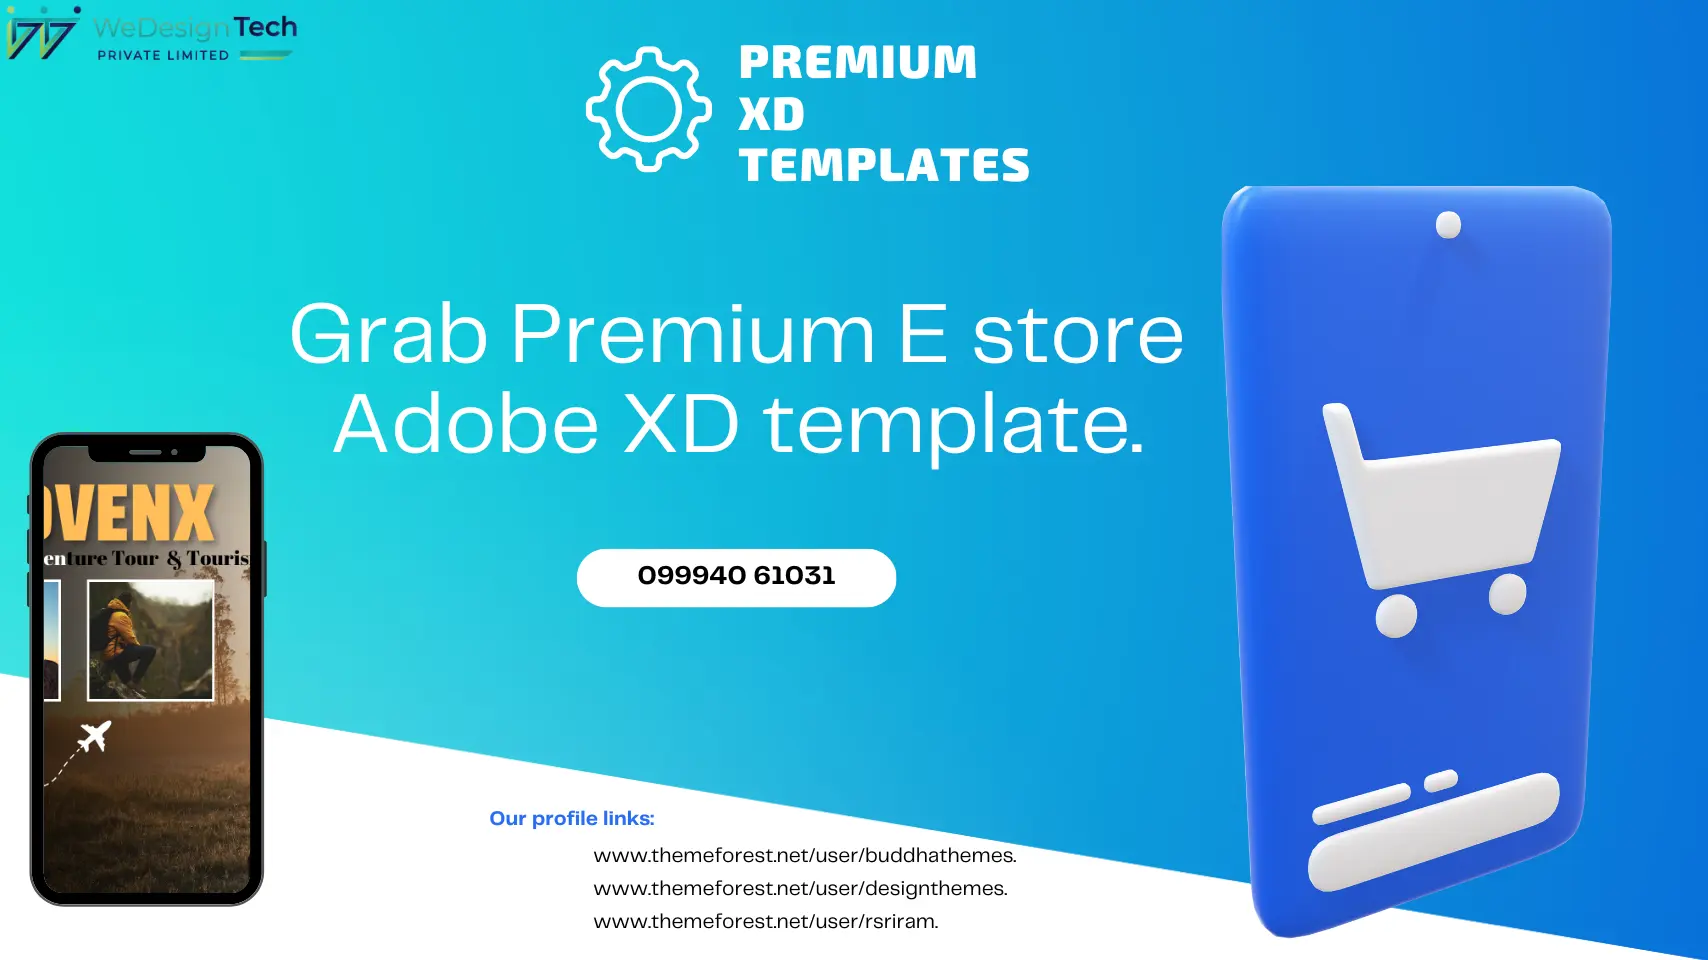 Adobe XD template